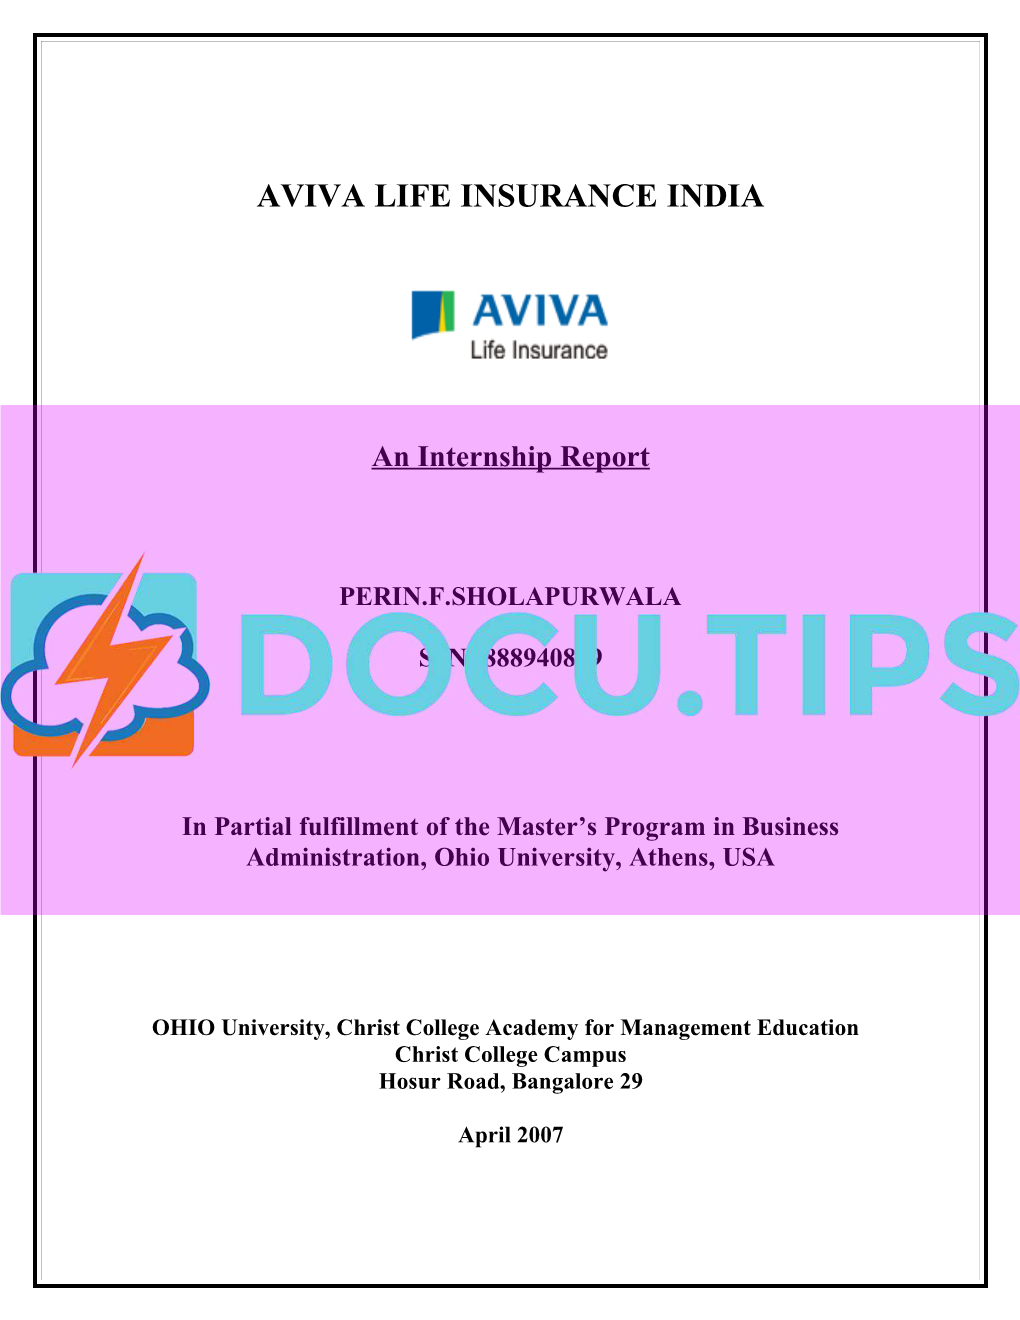 Aviva Life Insurance India